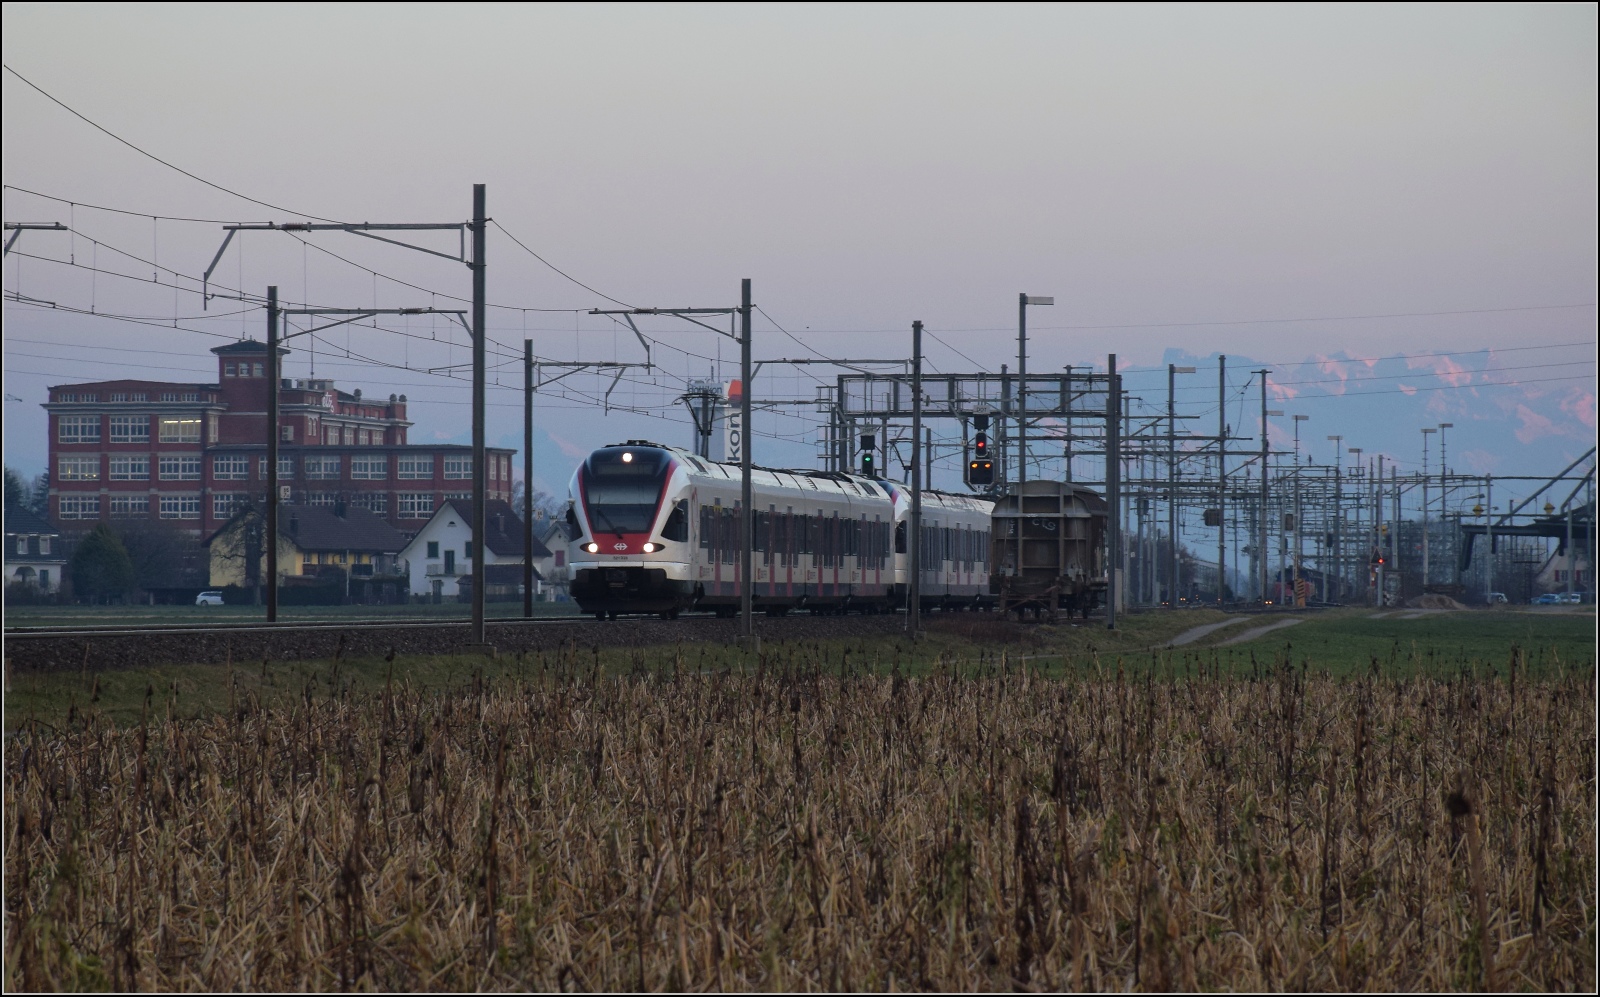 Am fast dauerverschlossenen Bahnbergang.

RABe 521 028 'Liestal' und RABe 523 069 in Dottikon. Februar 2023.